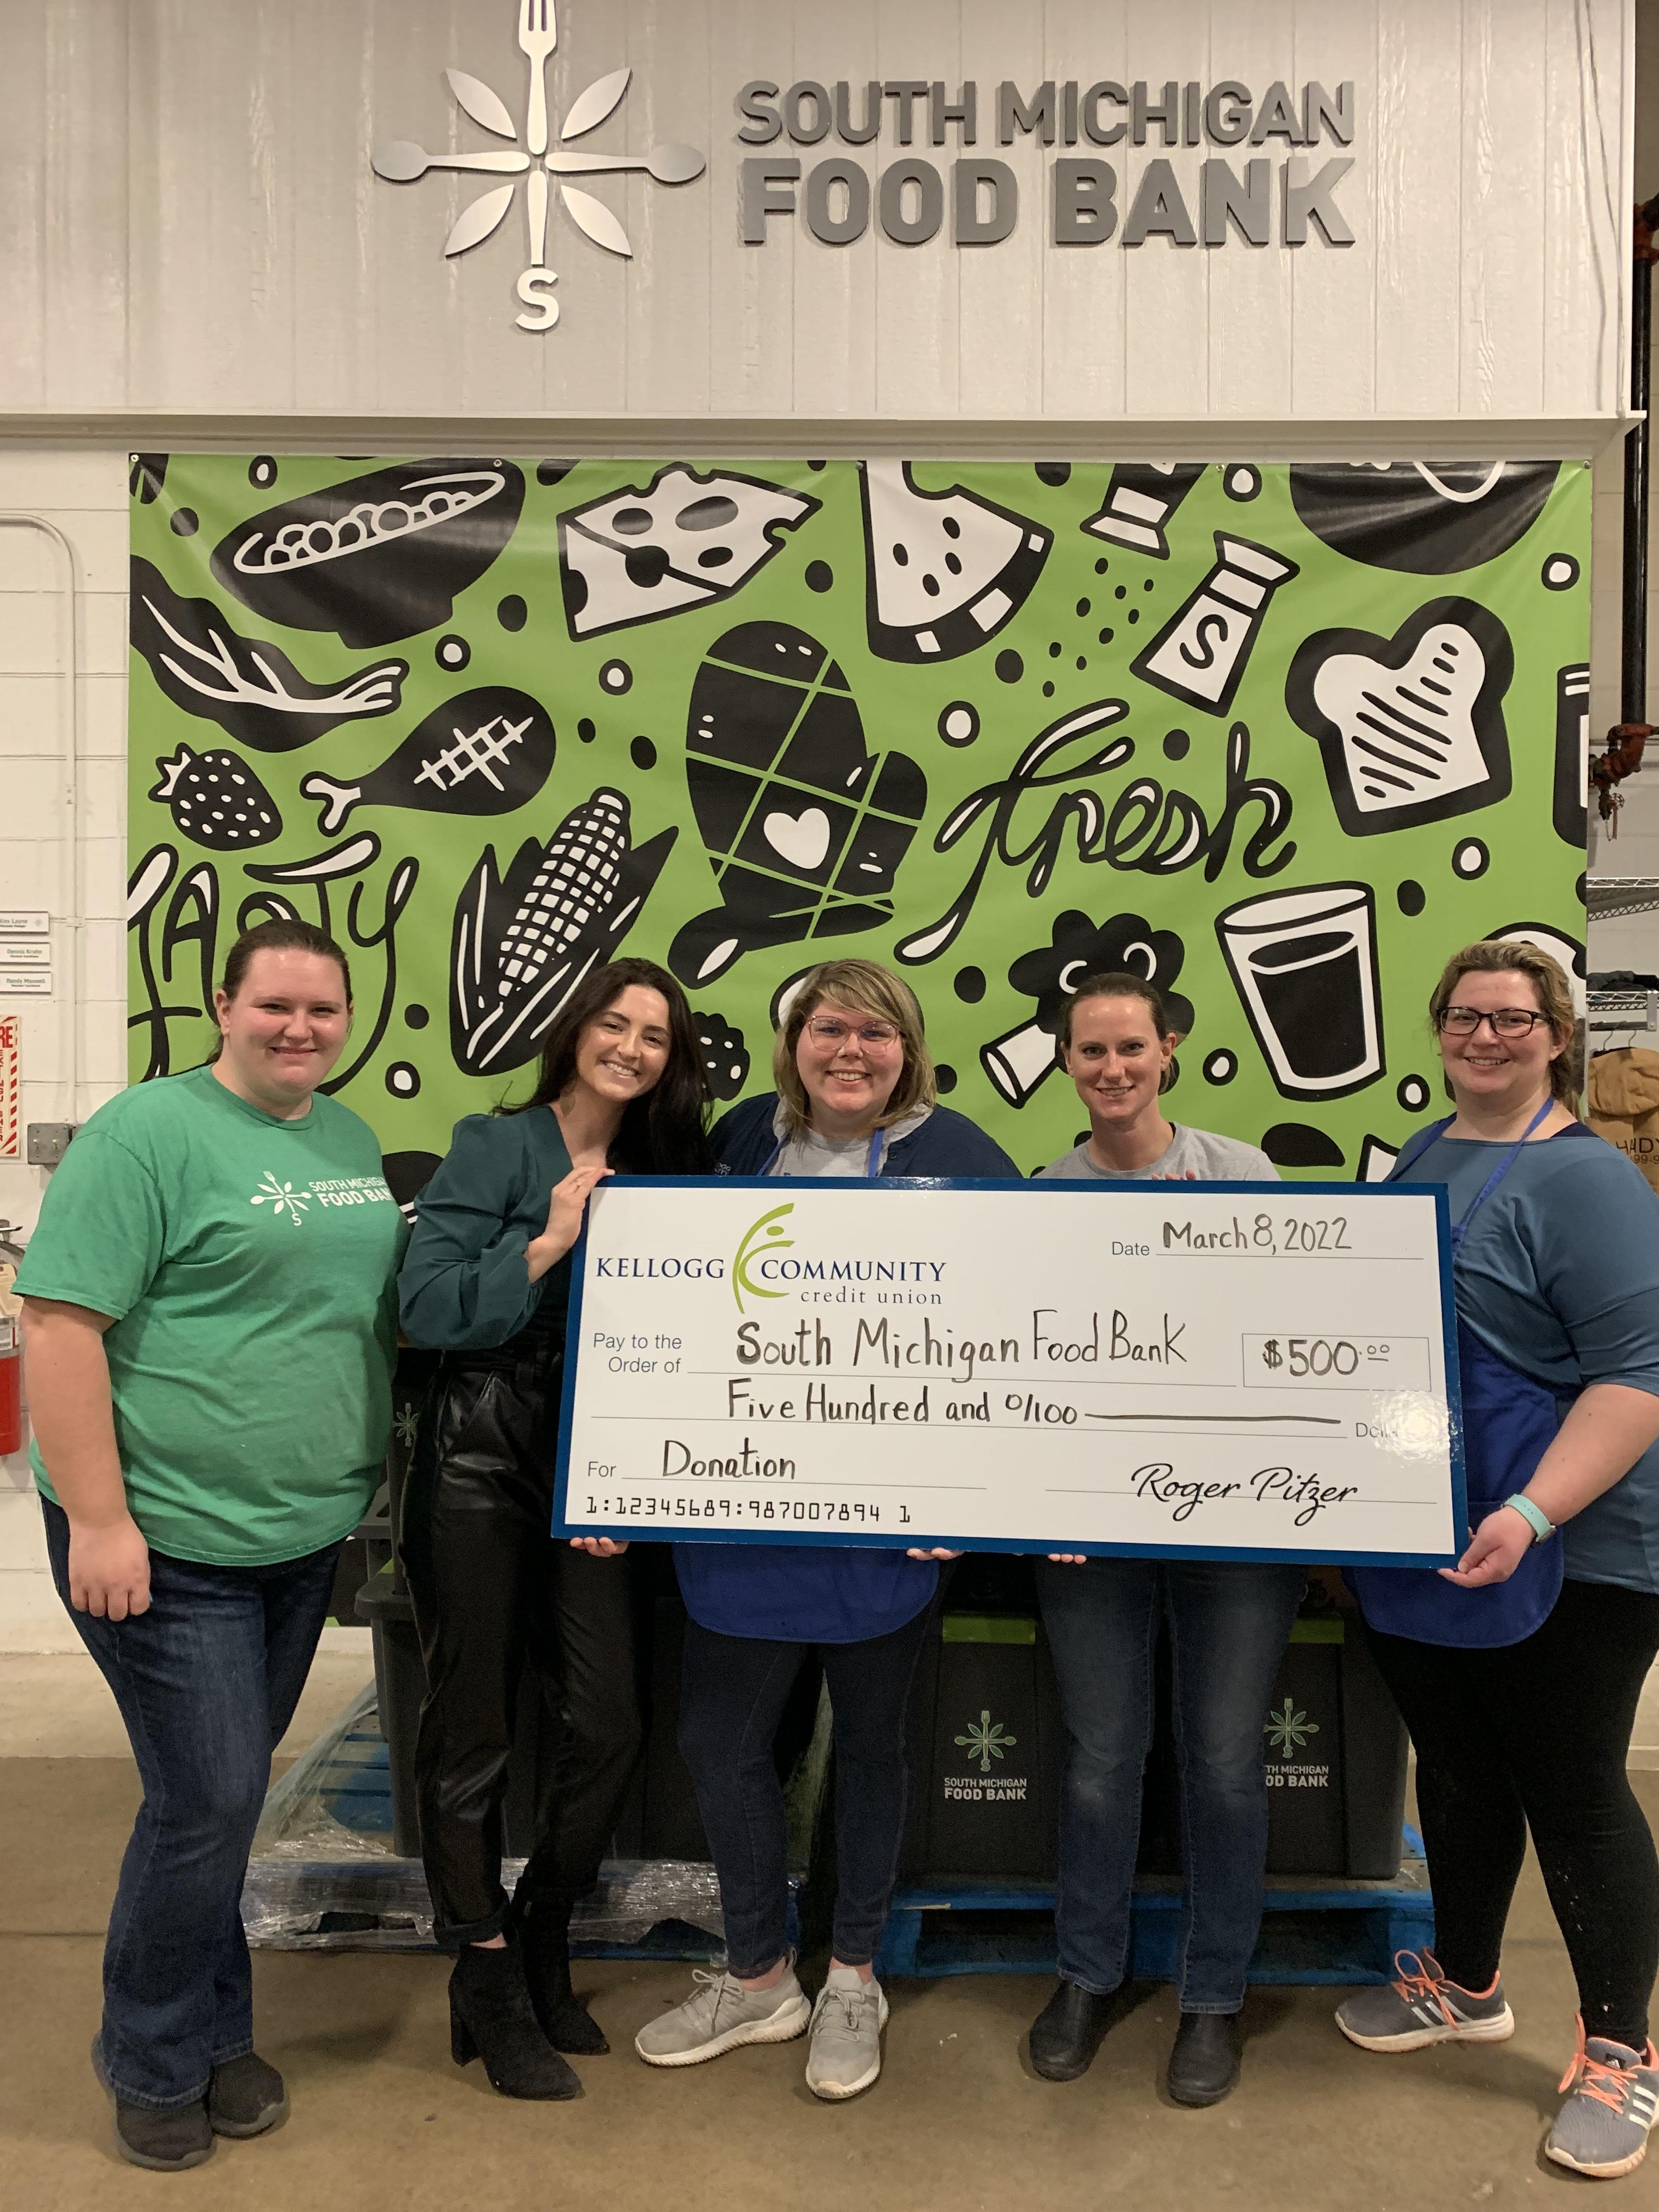 KCCU team presents donation check to South Michigan Food Bank